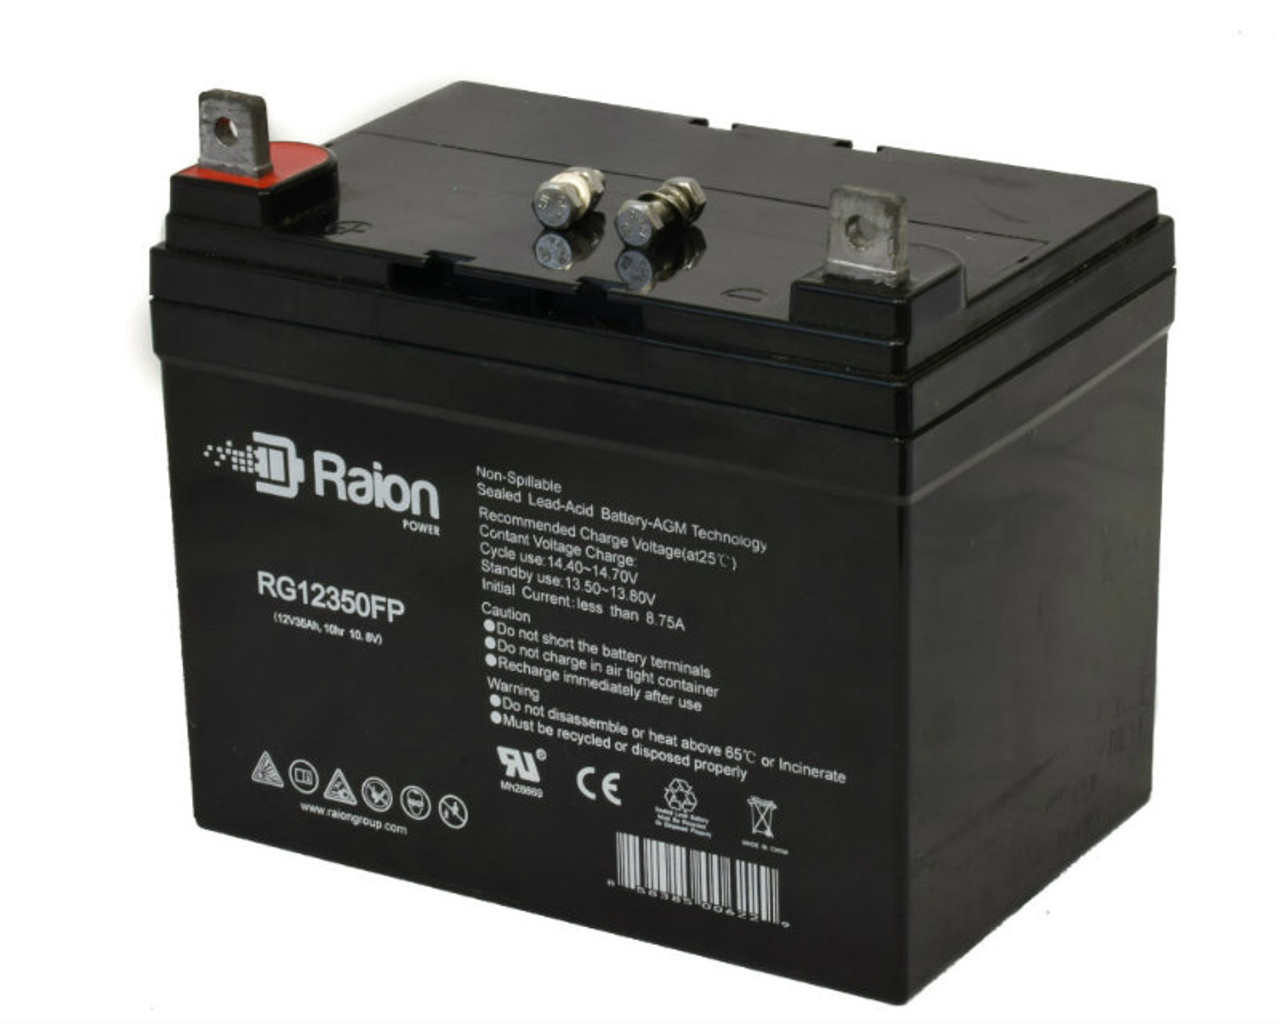 Raion Power Replacement 12V 35Ah RG12350FP Battery for Husqvarna LR110